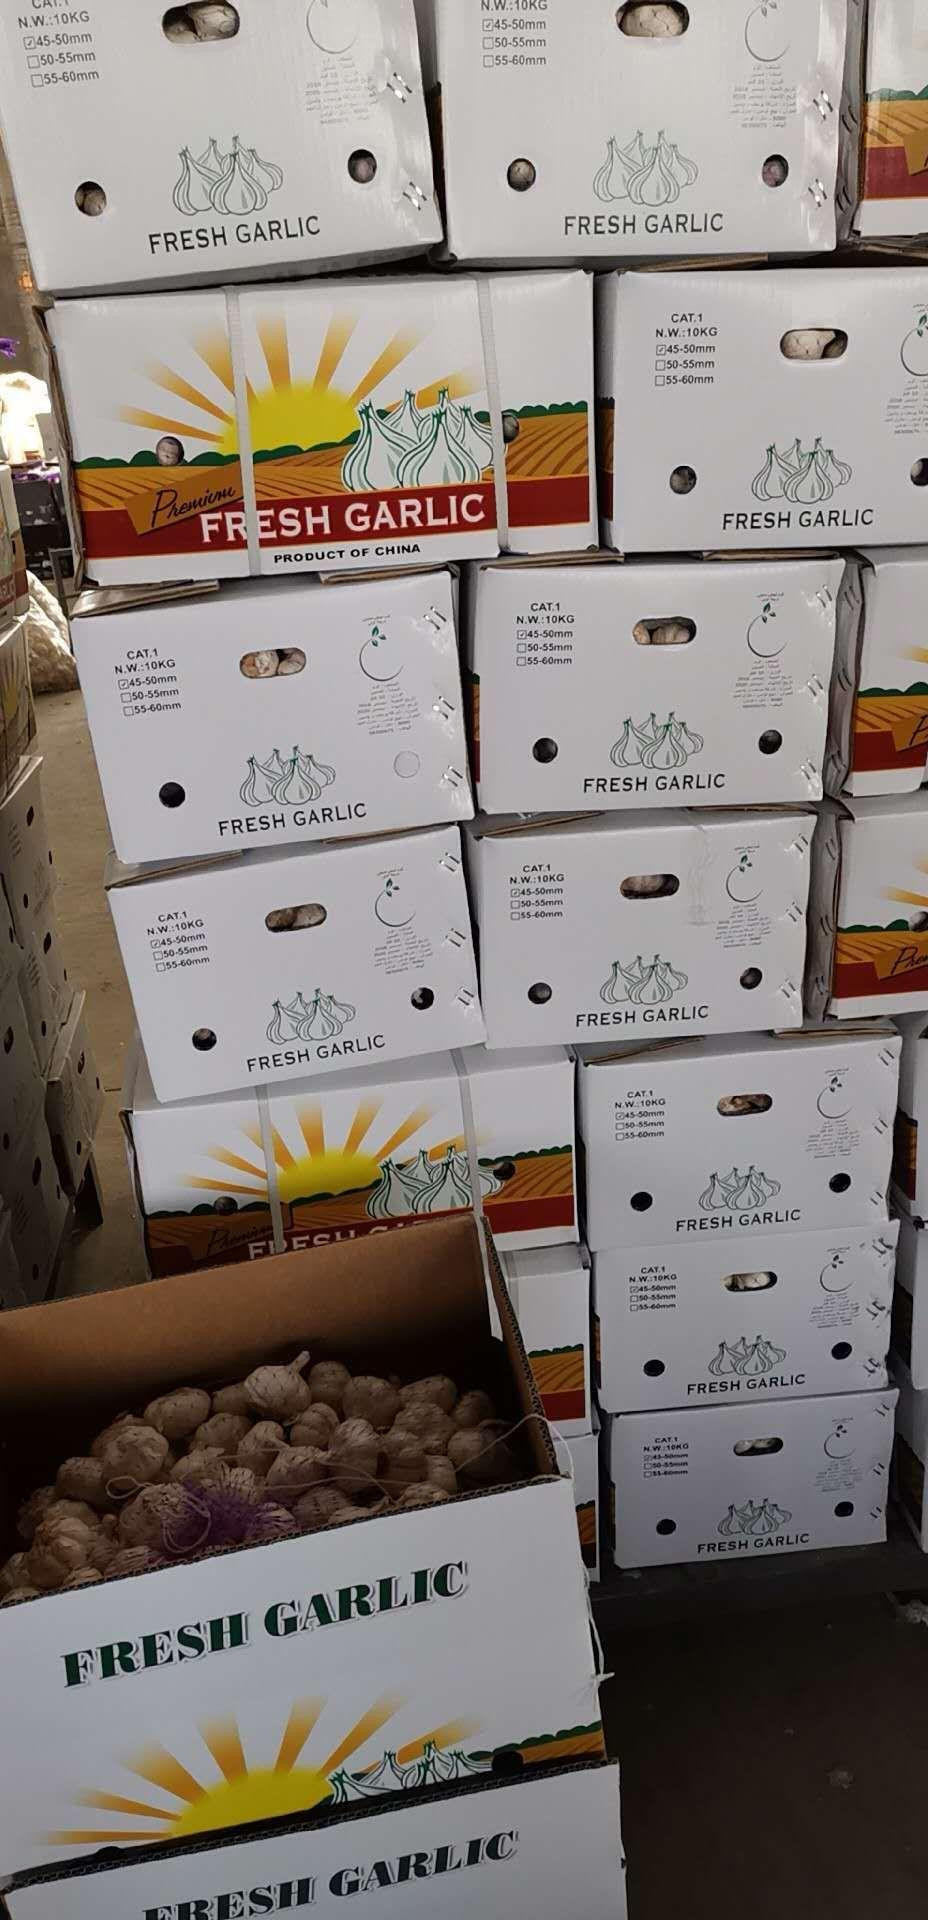 Garlic price influence factor